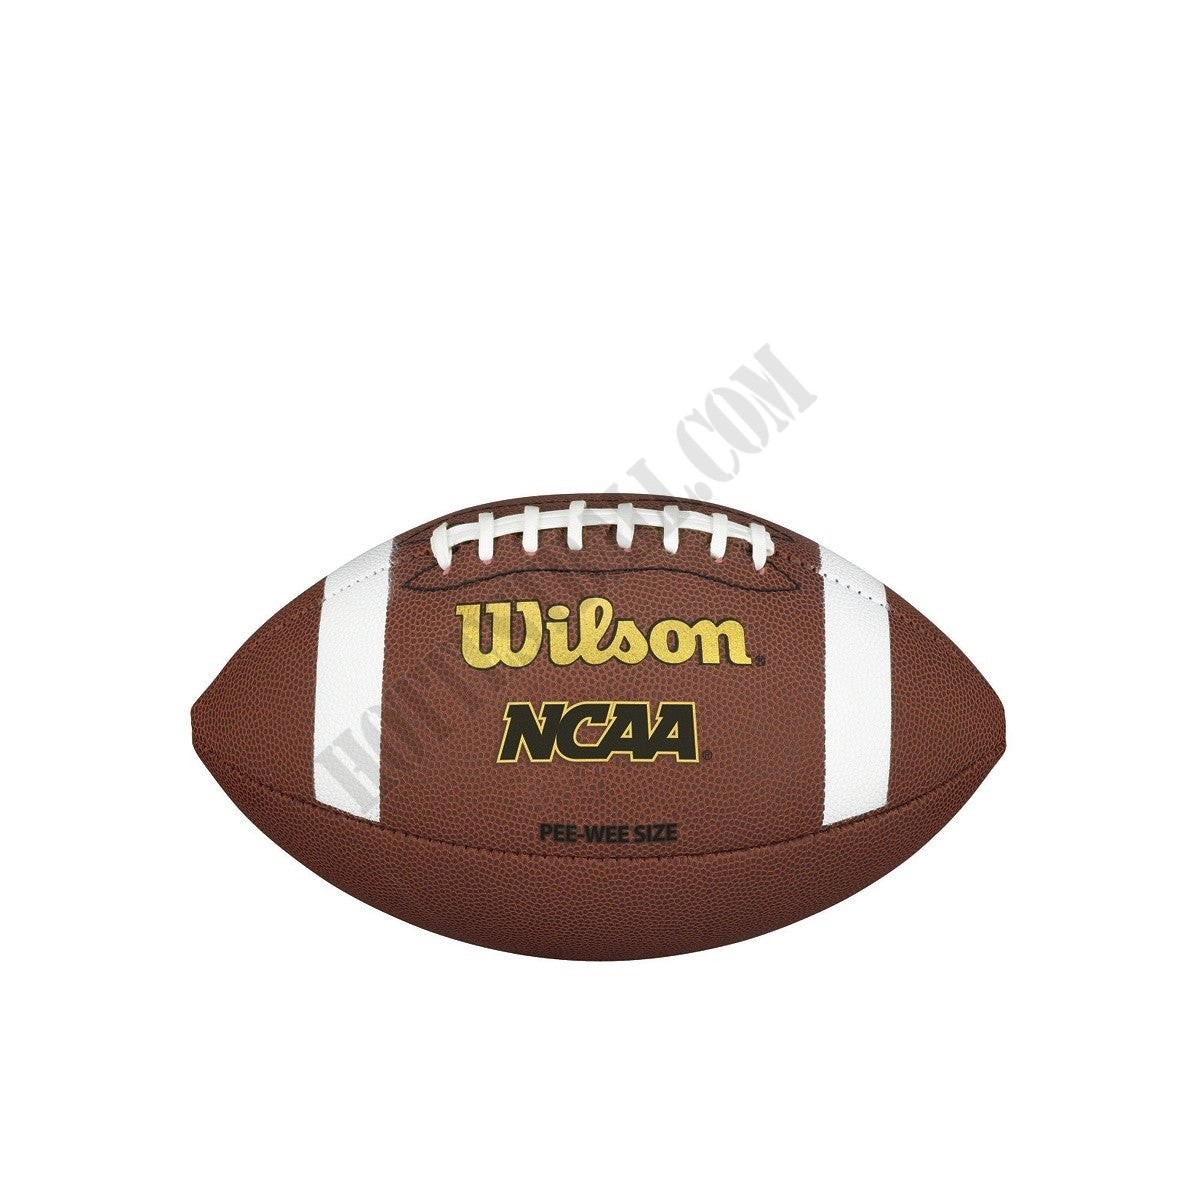 NCAA K2 Pattern Composite Football - Pee Wee - Wilson Discount Store - NCAA K2 Pattern Composite Football - Pee Wee - Wilson Discount Store